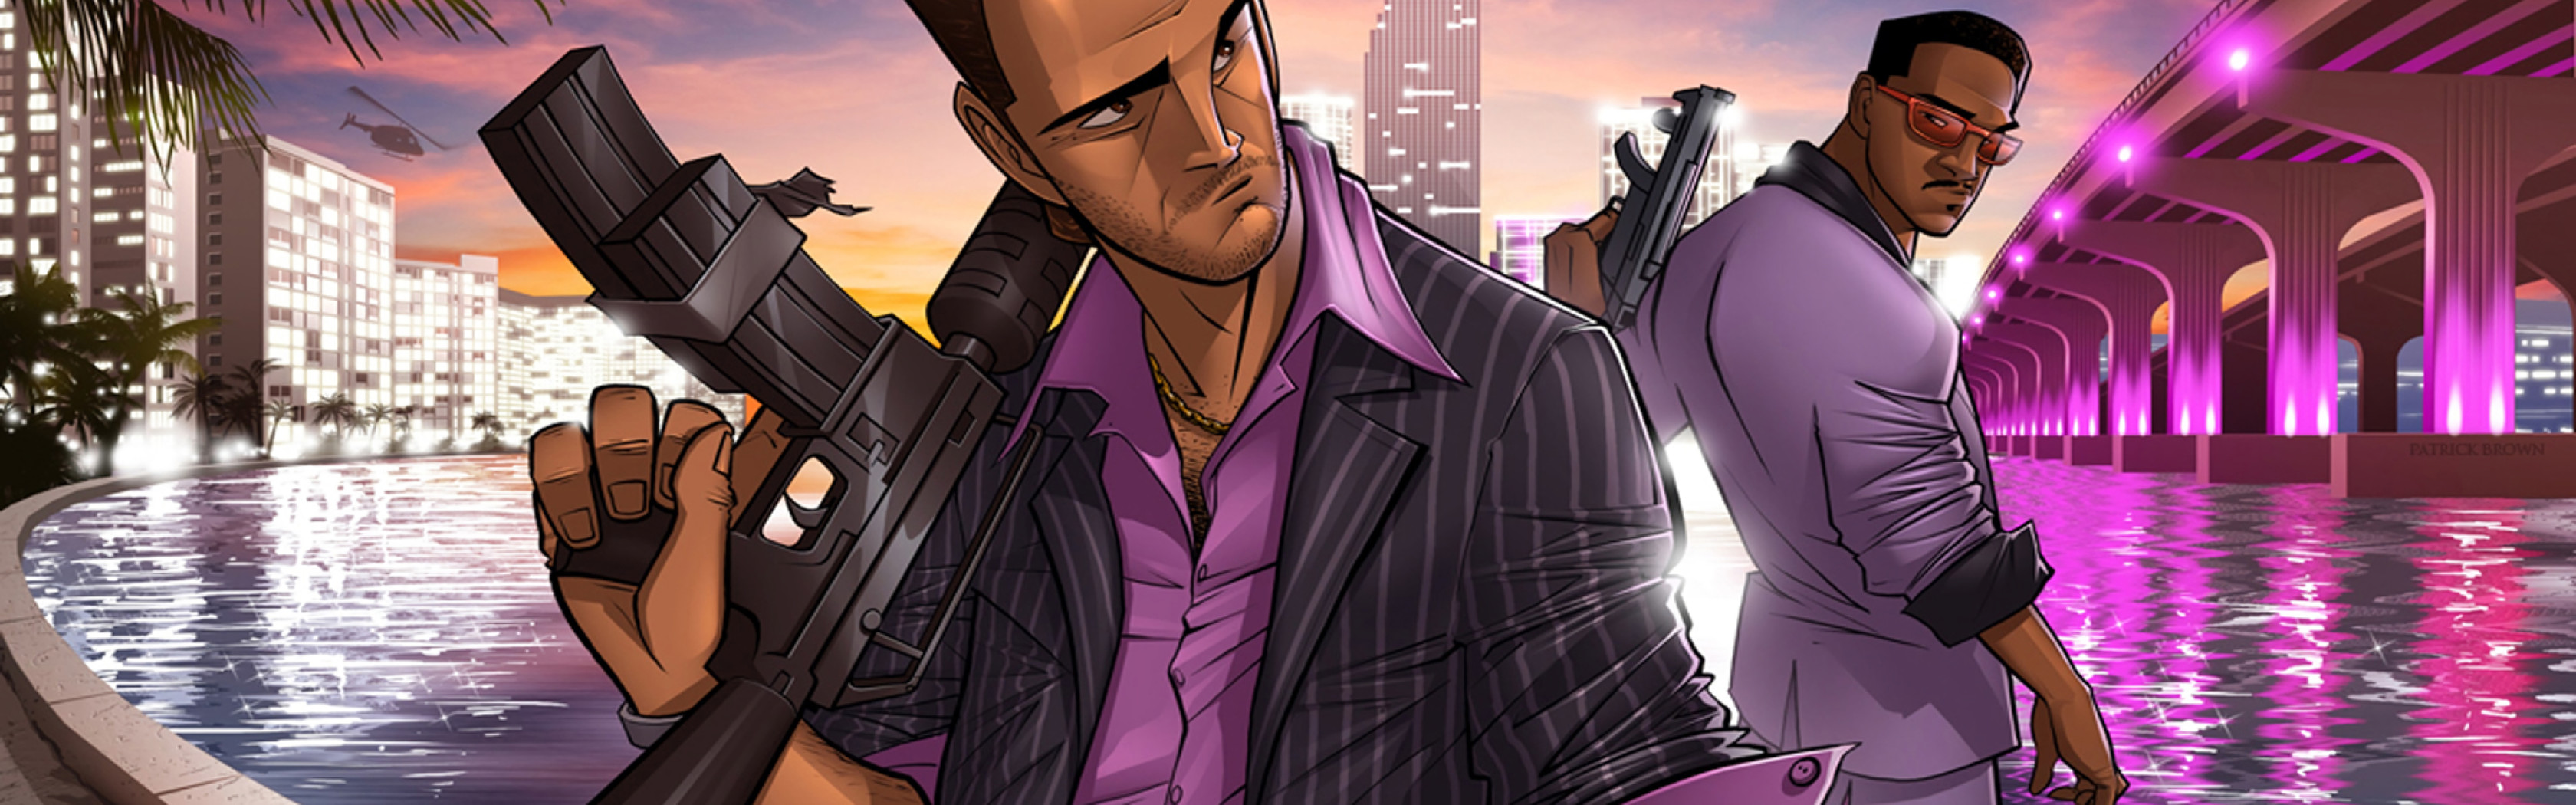 Grand Theft Auto: Vice City - 3360x1050 (2X 1680x1050) .